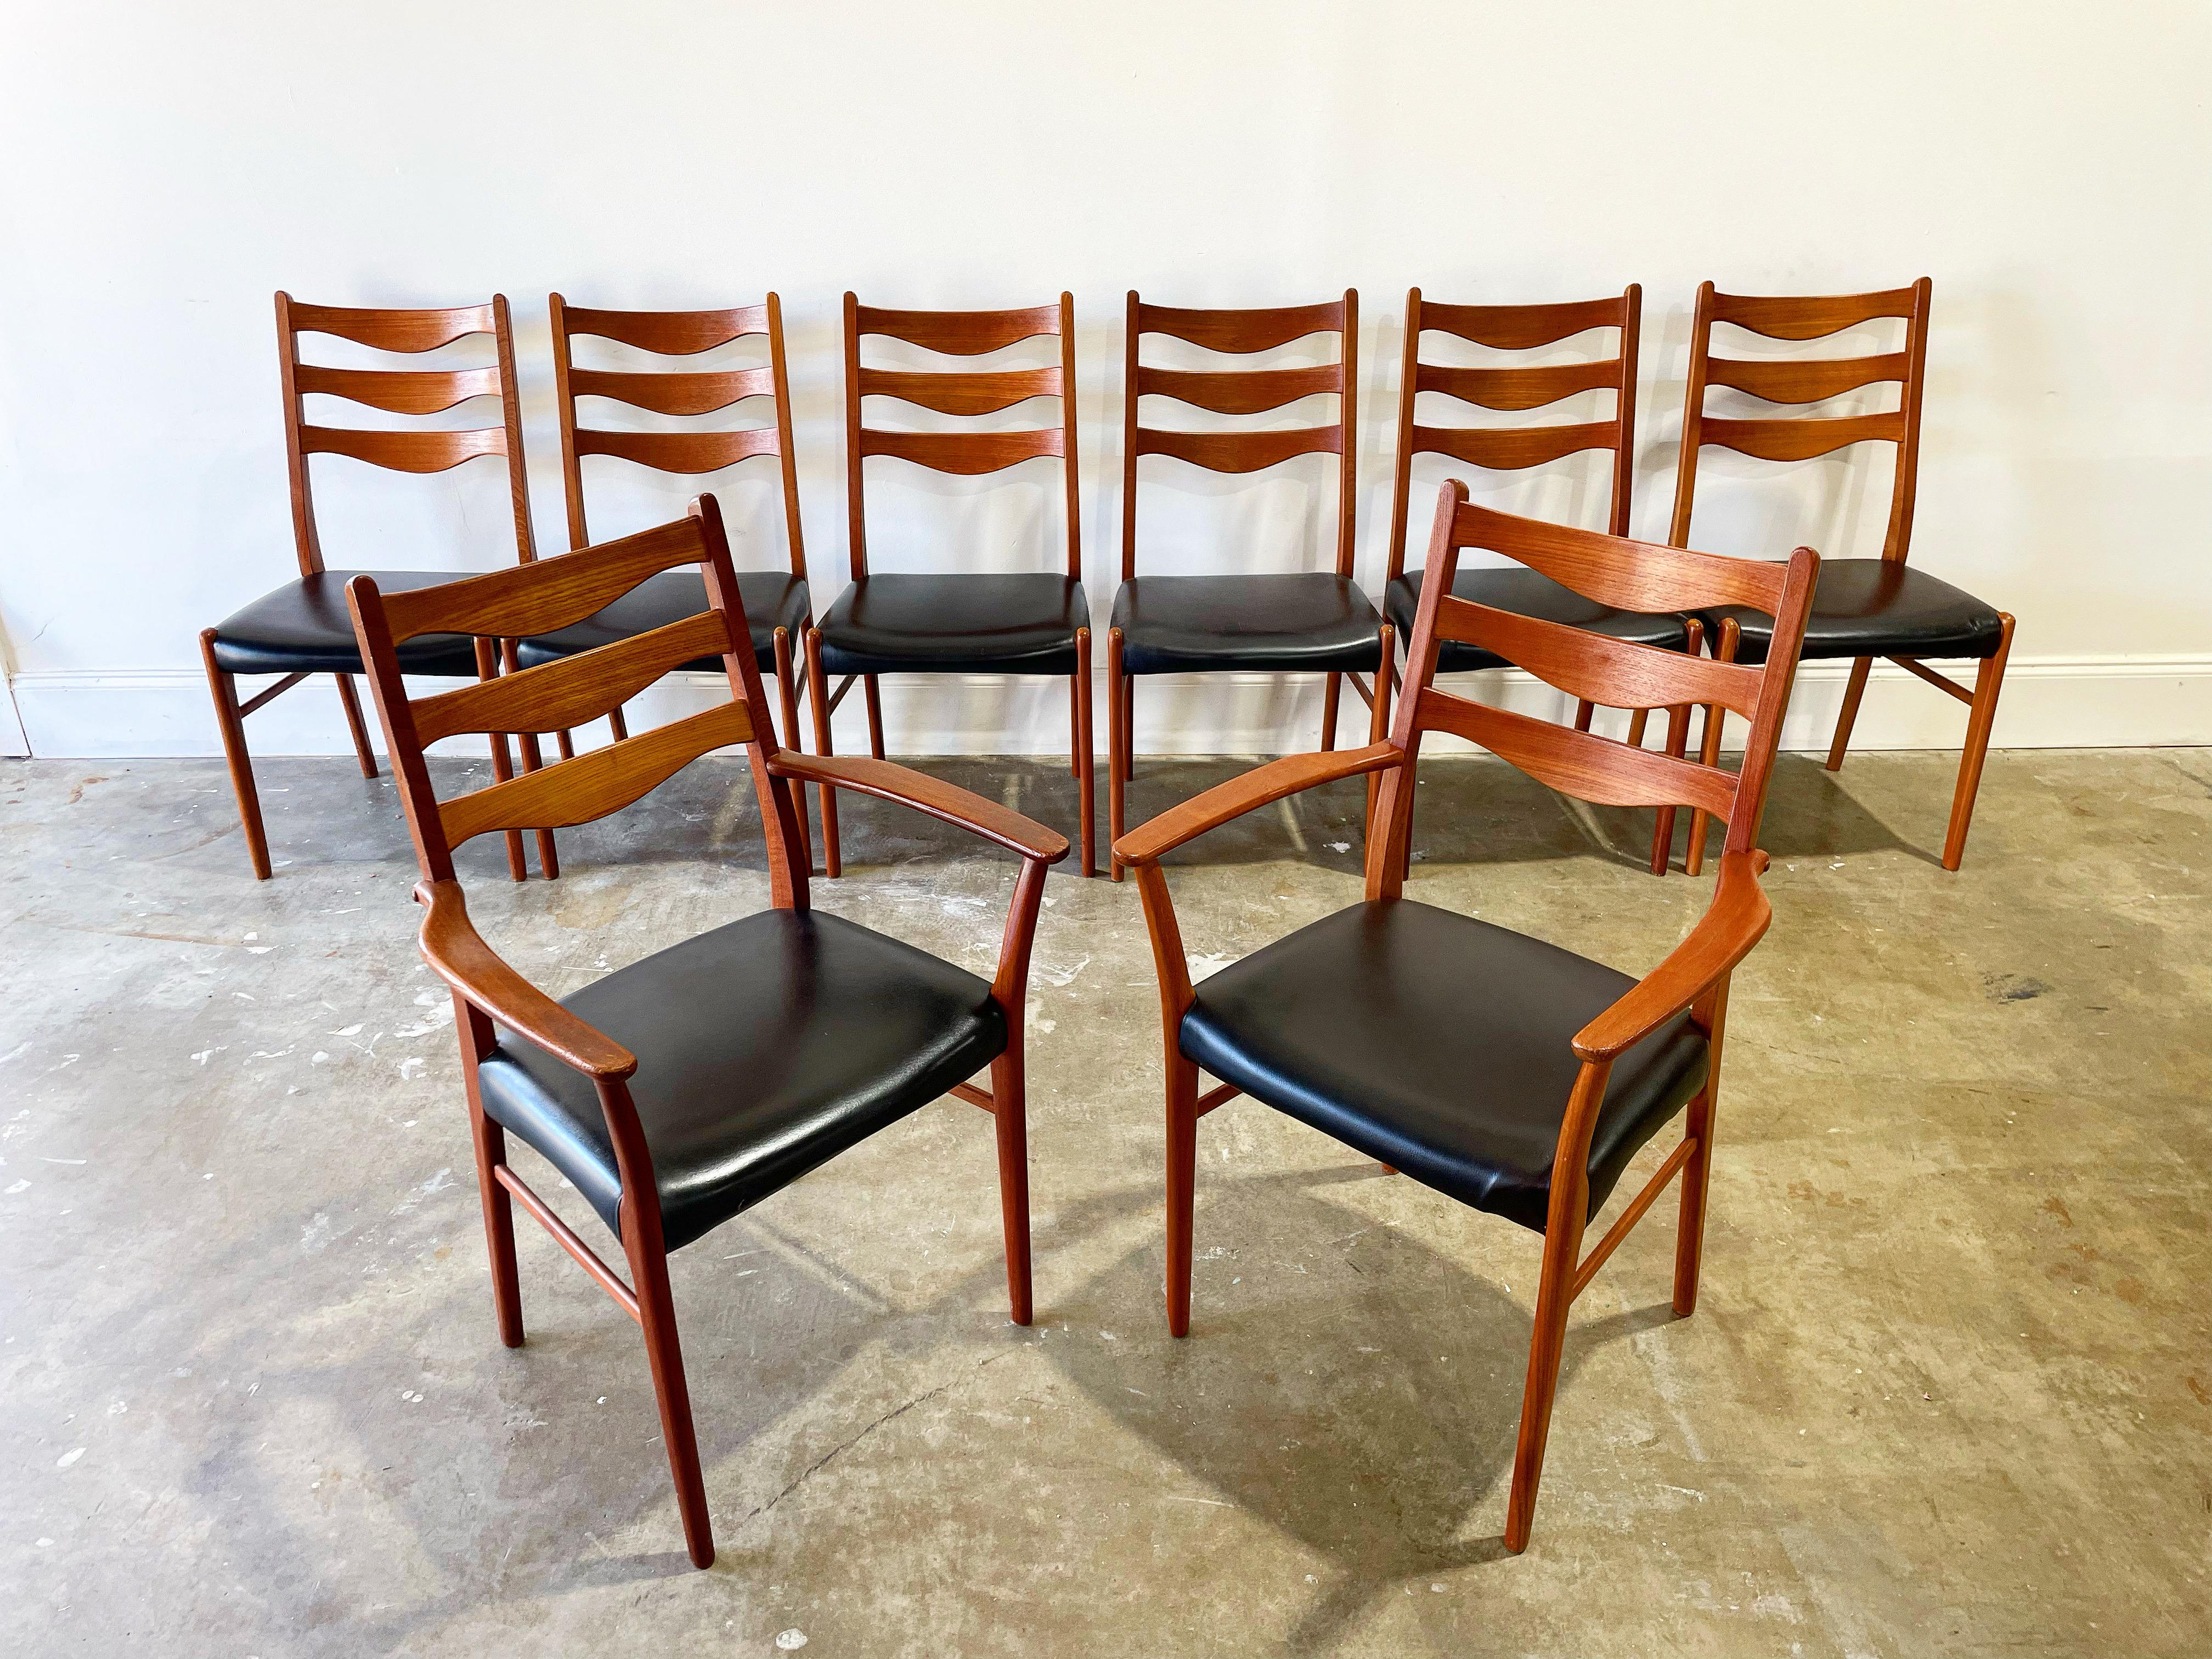 Scandinavian Modern Arne Wahl Iversen Dining Chairs in Teak, Set of 8, Midcentury Danish Modern